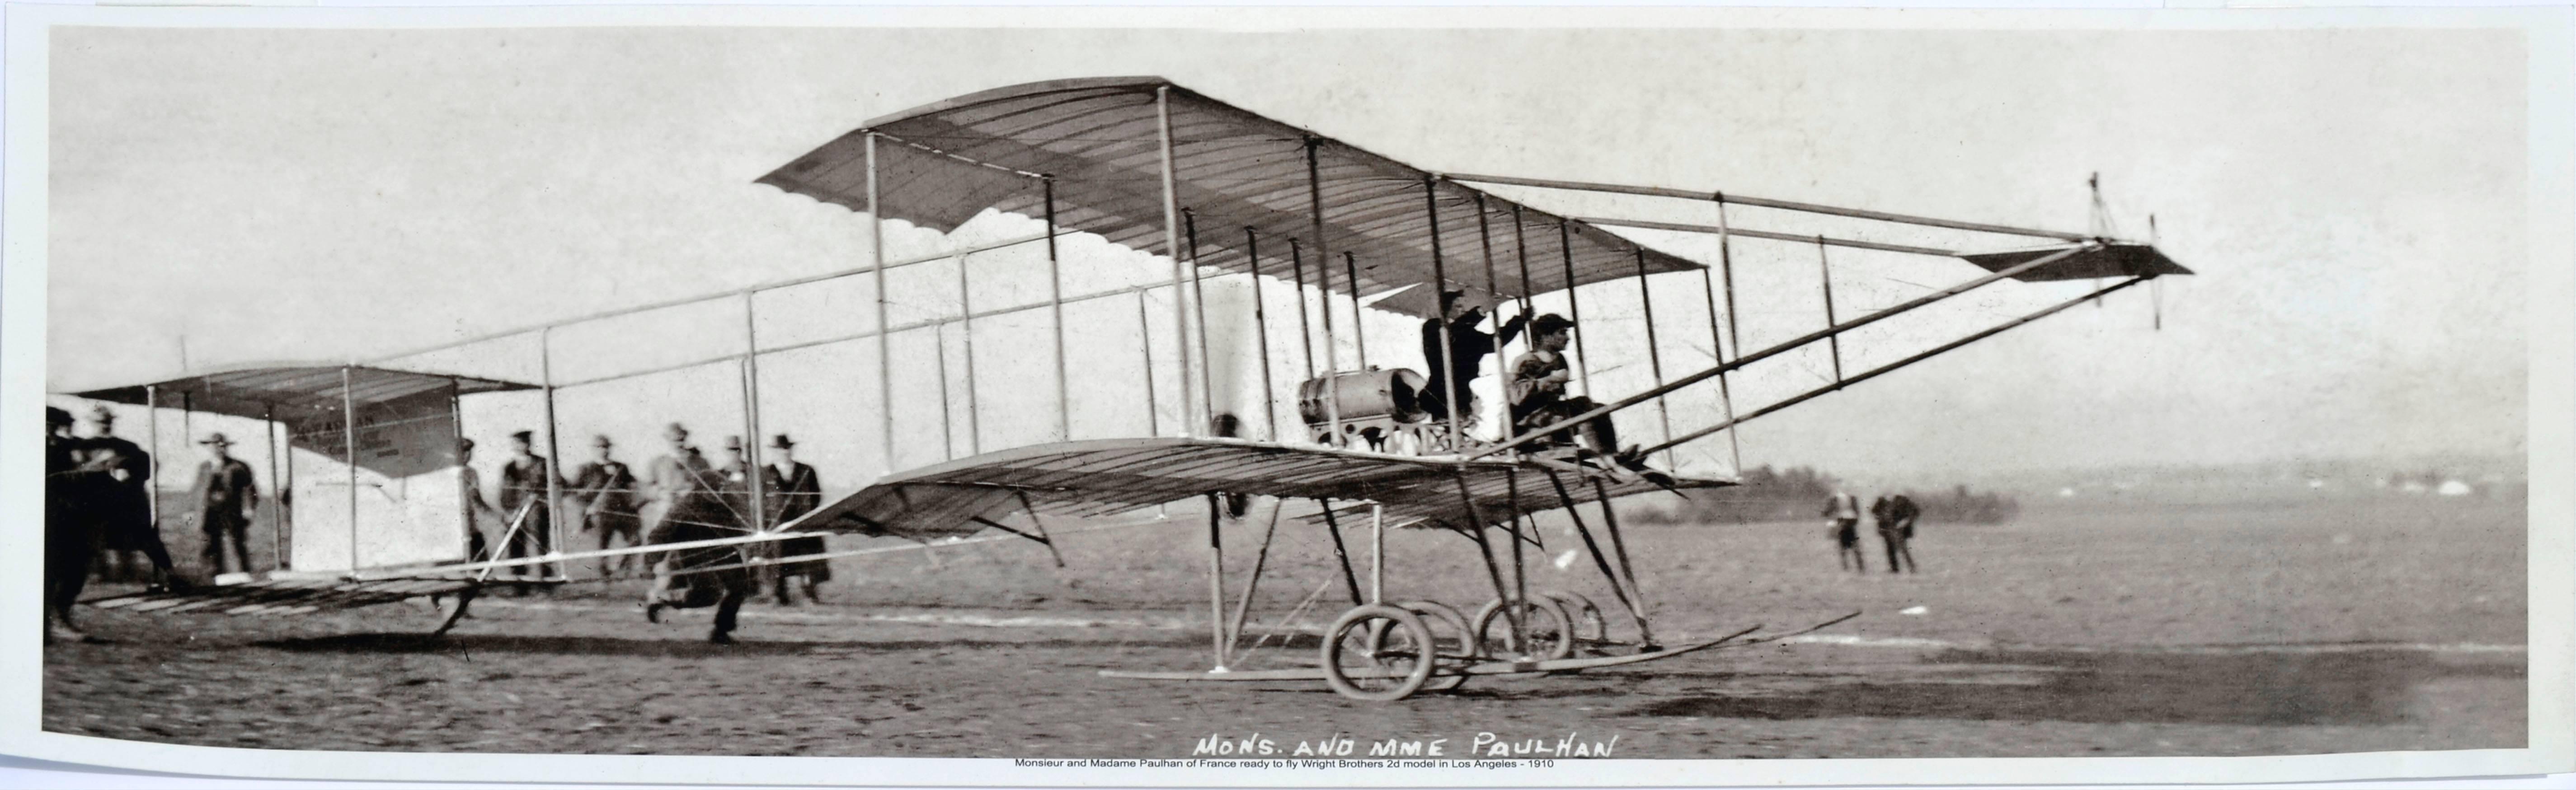 Madame Paulhan Fly a Farman Airship 1910 Los Angeles Int. Flugschau  (Realismus), Photograph, von Roy Christian